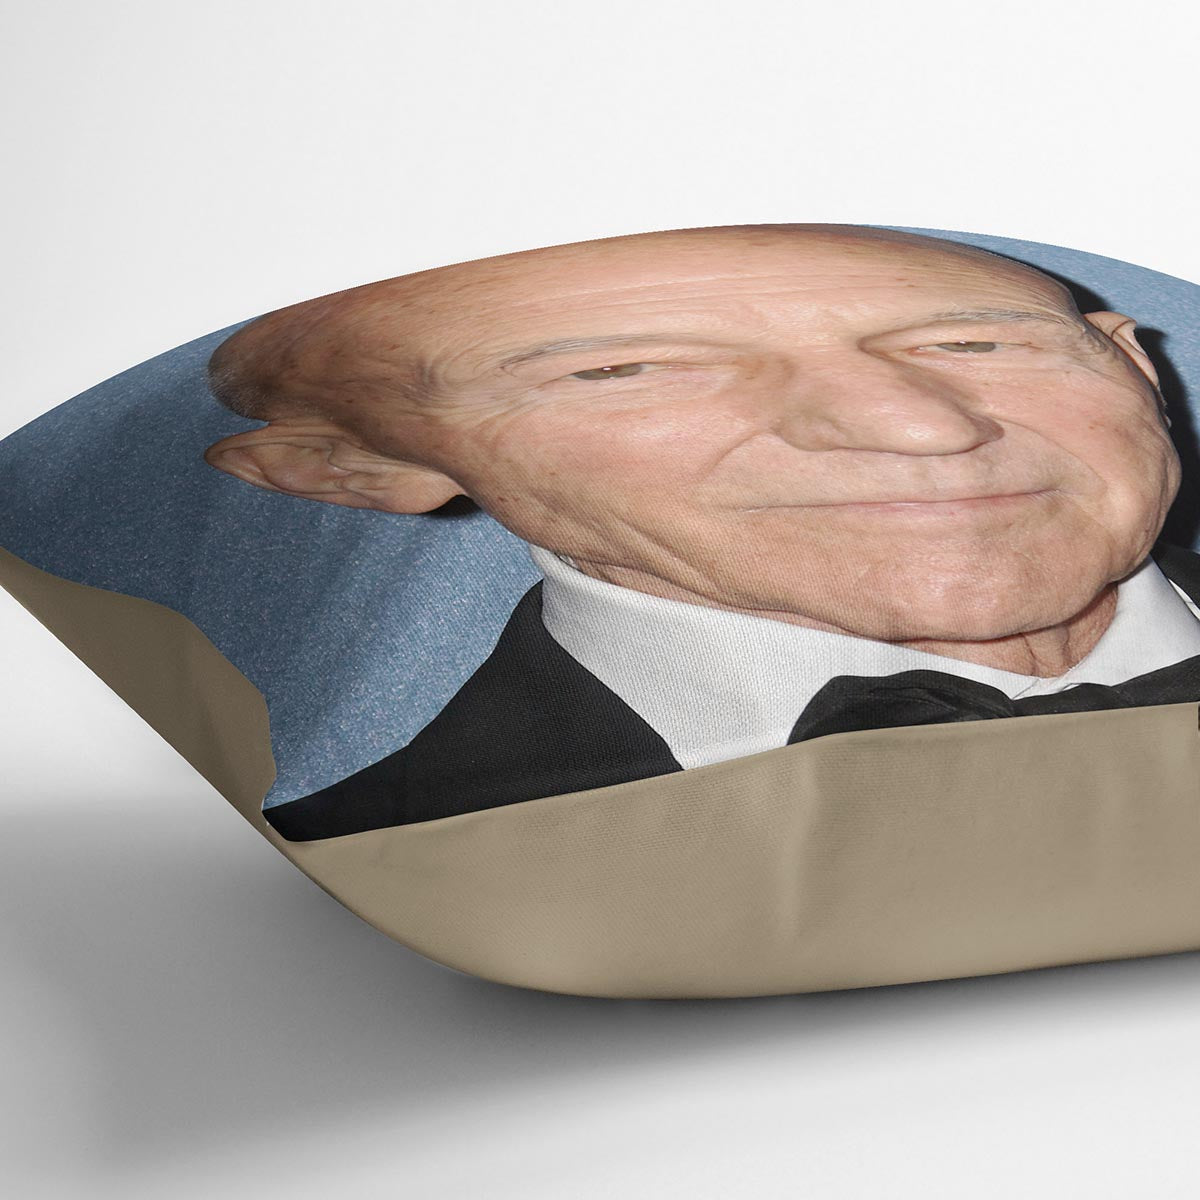 Patrick Stewart in a bow tie Cushion